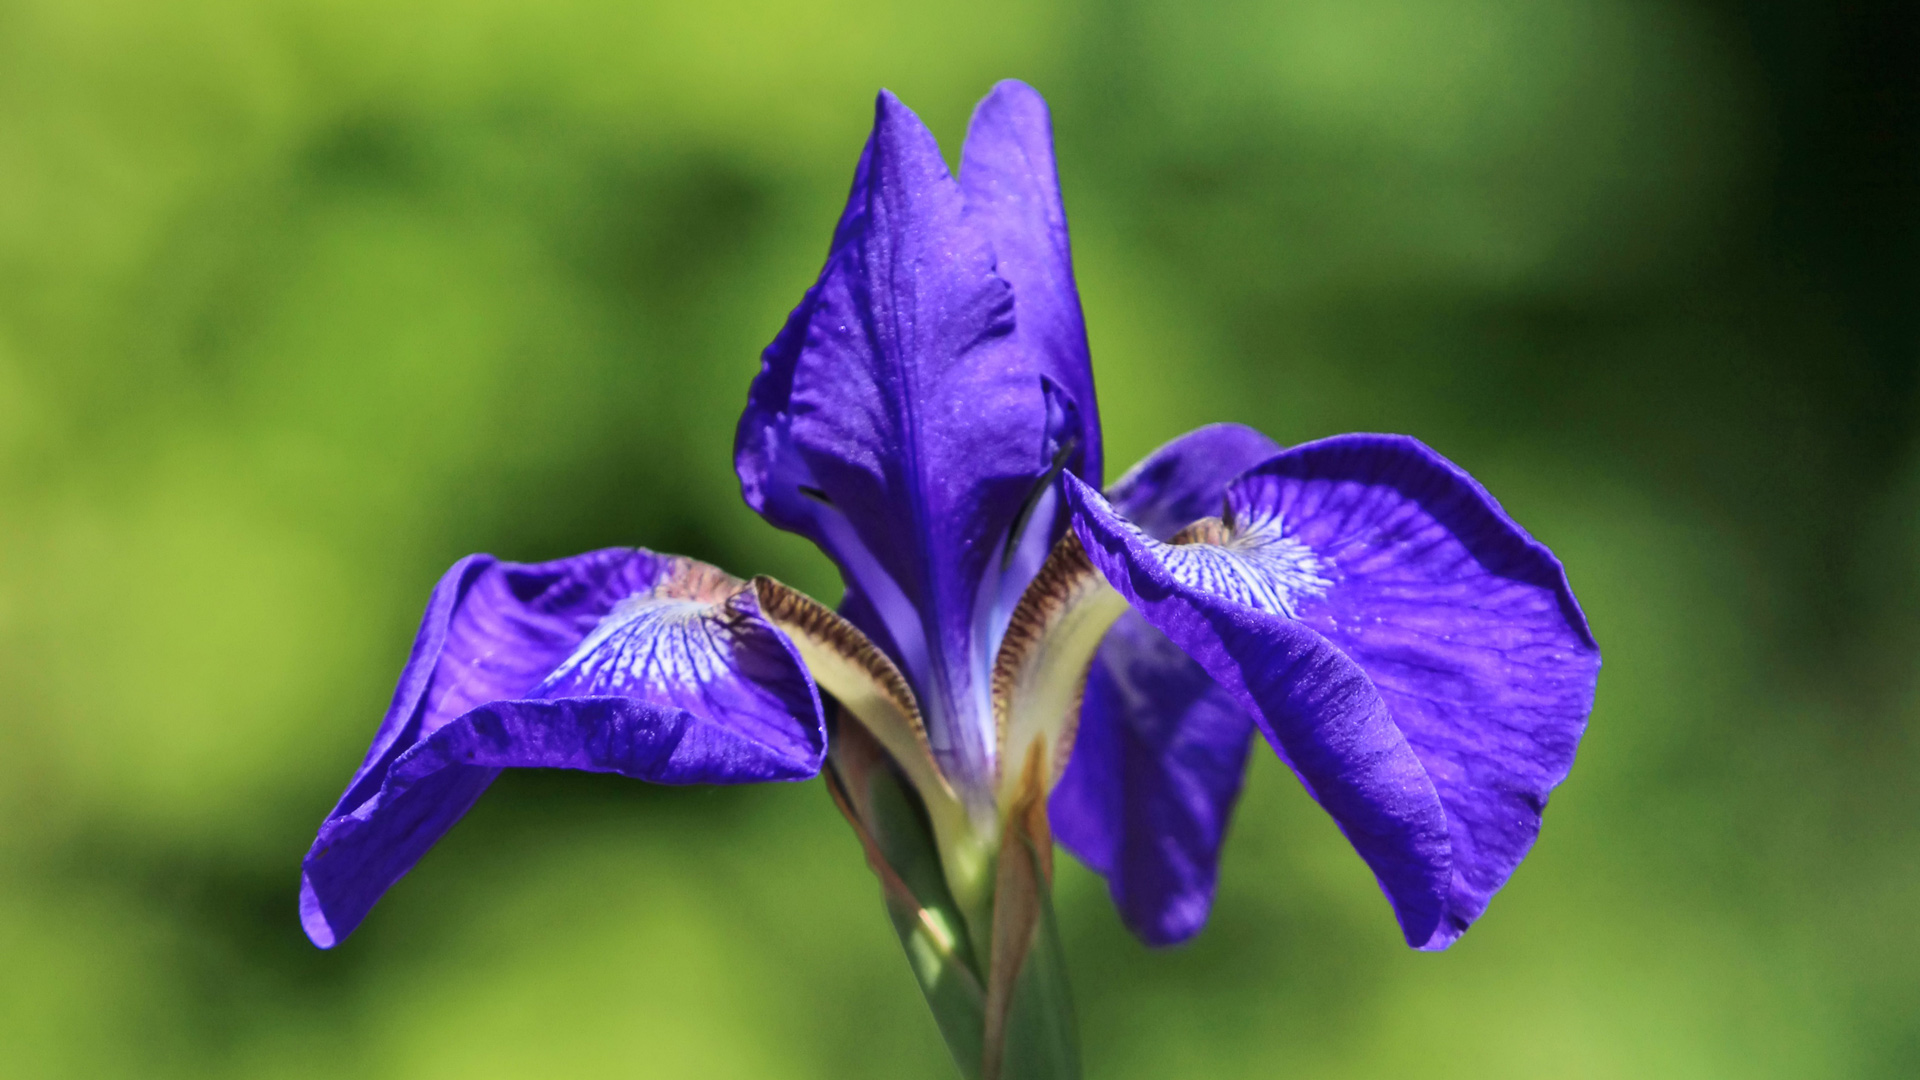 Close up on bluish purple japenese iris also known as kaempferi iris or ensata iris.